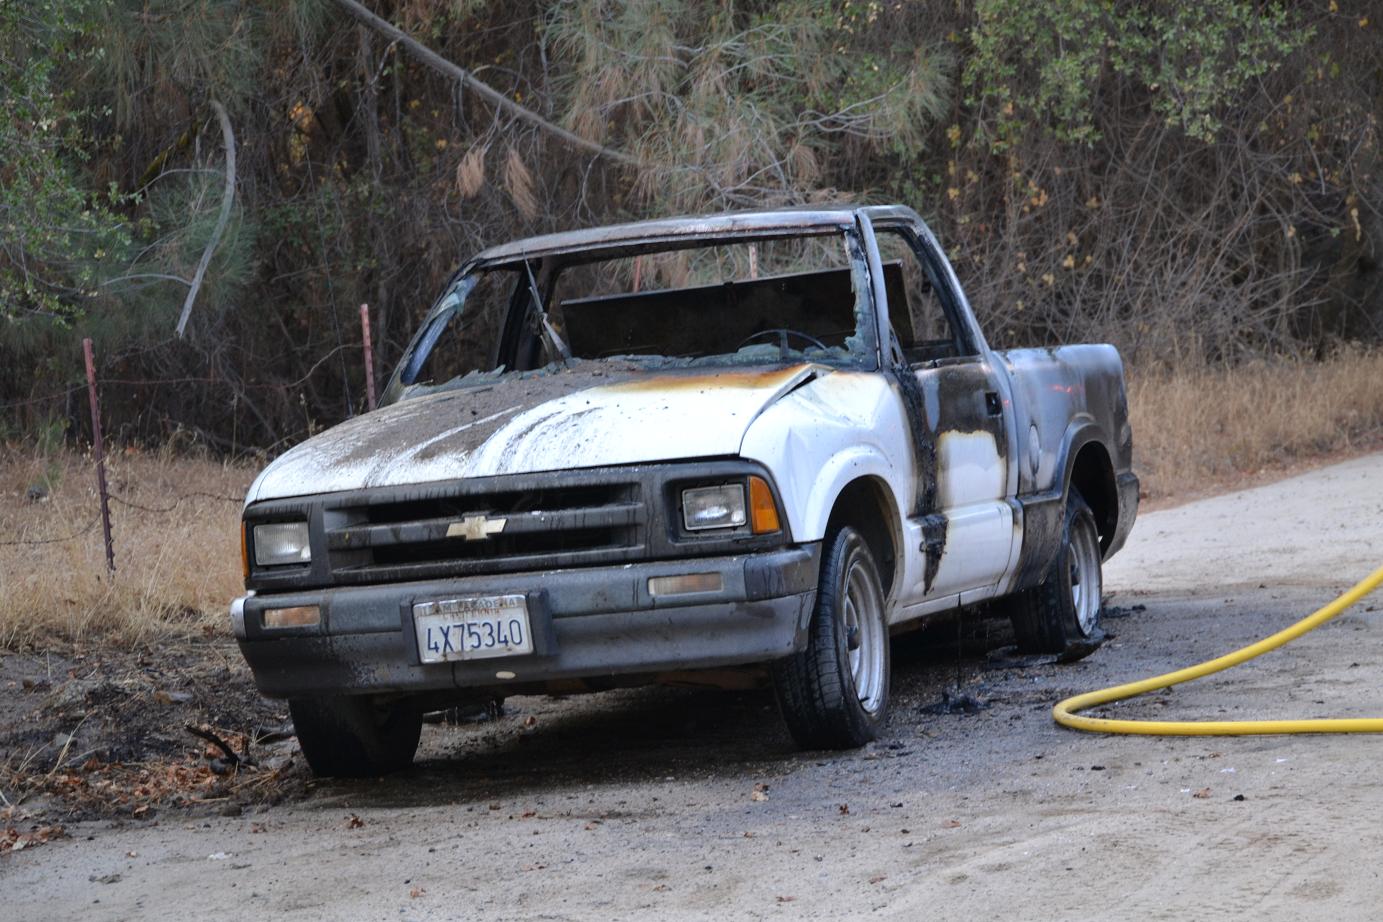 Chevy pickup burns on Hadley Rd - photo by Gina Clugston